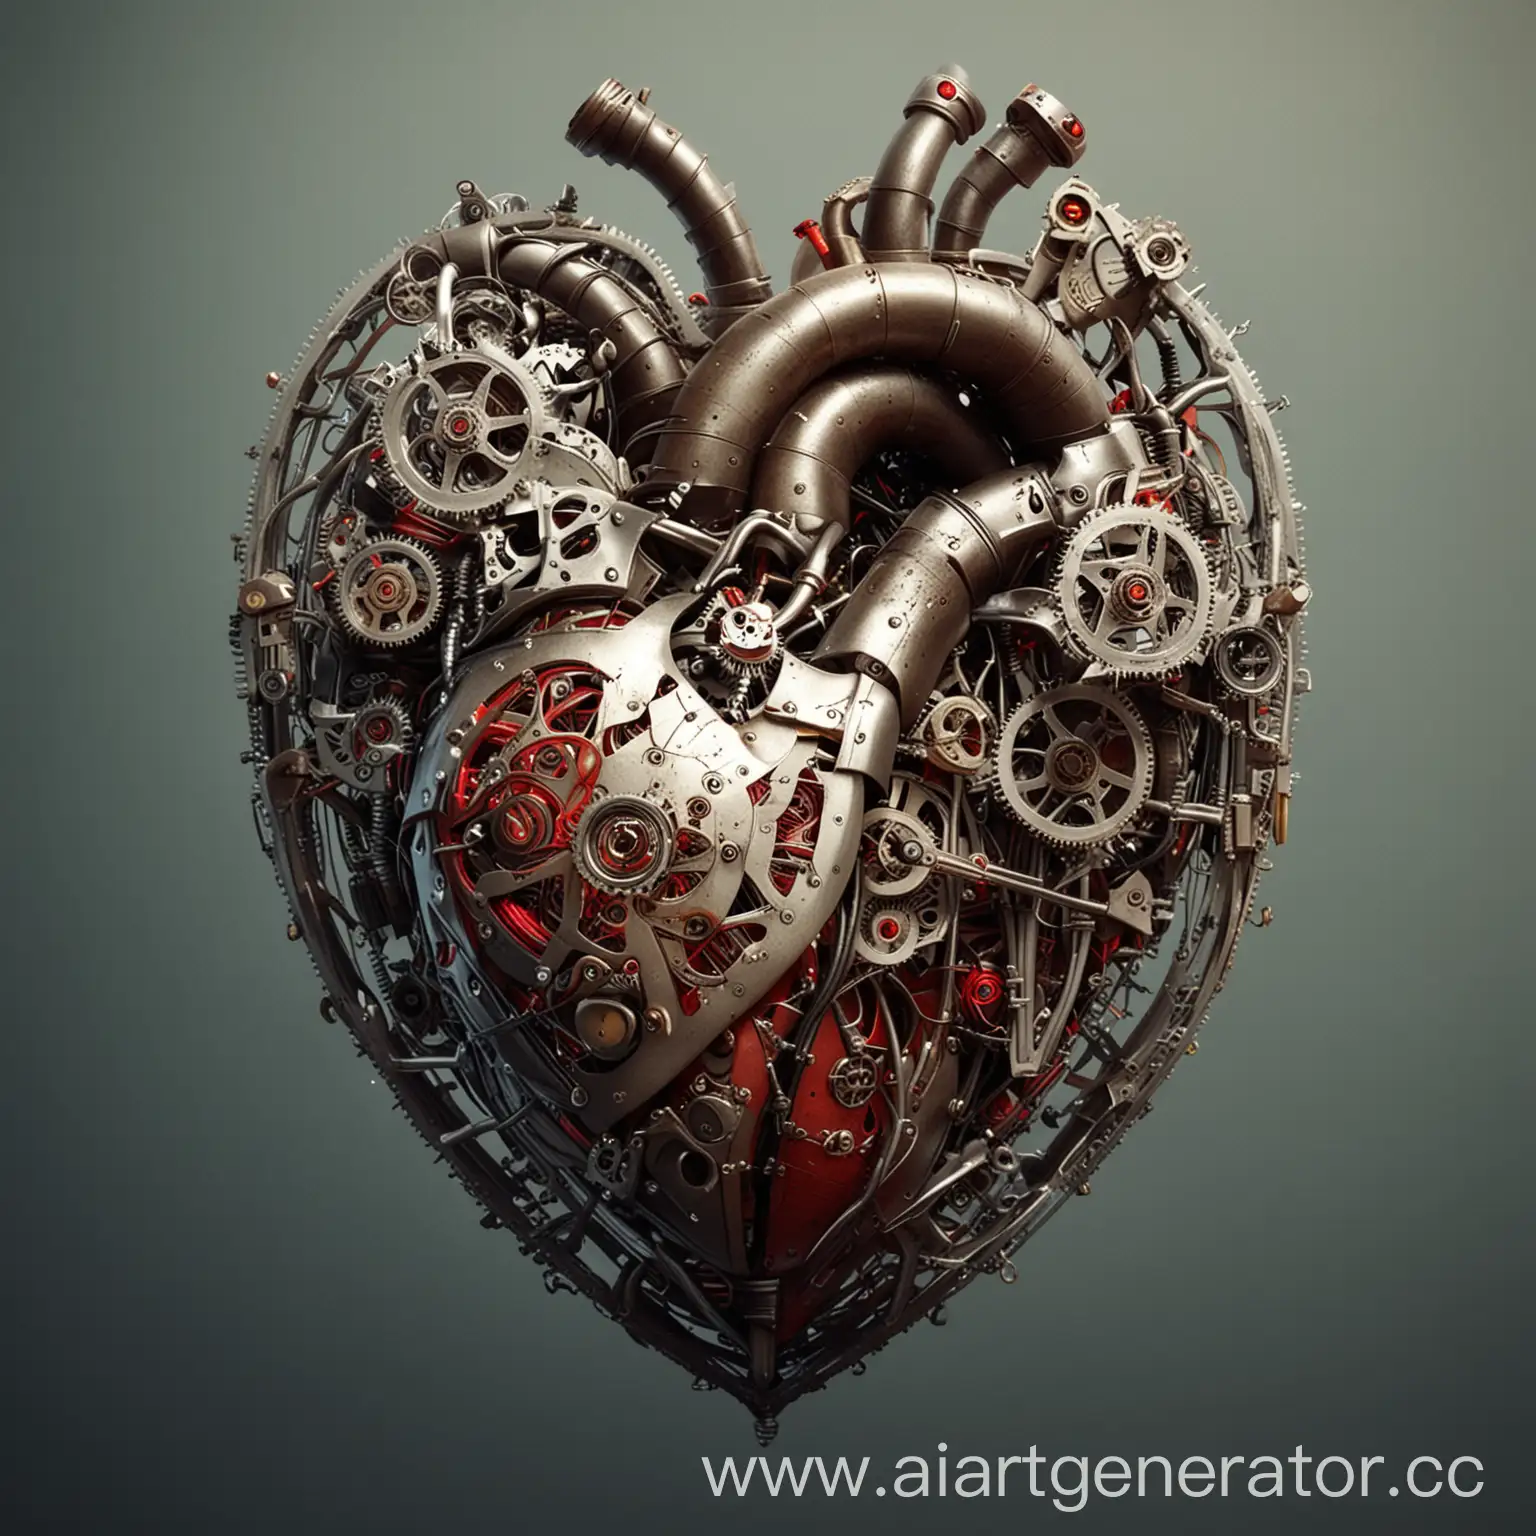 Intricate-Mechanical-Heart-Illustration-Steampunk-Style-Artwork